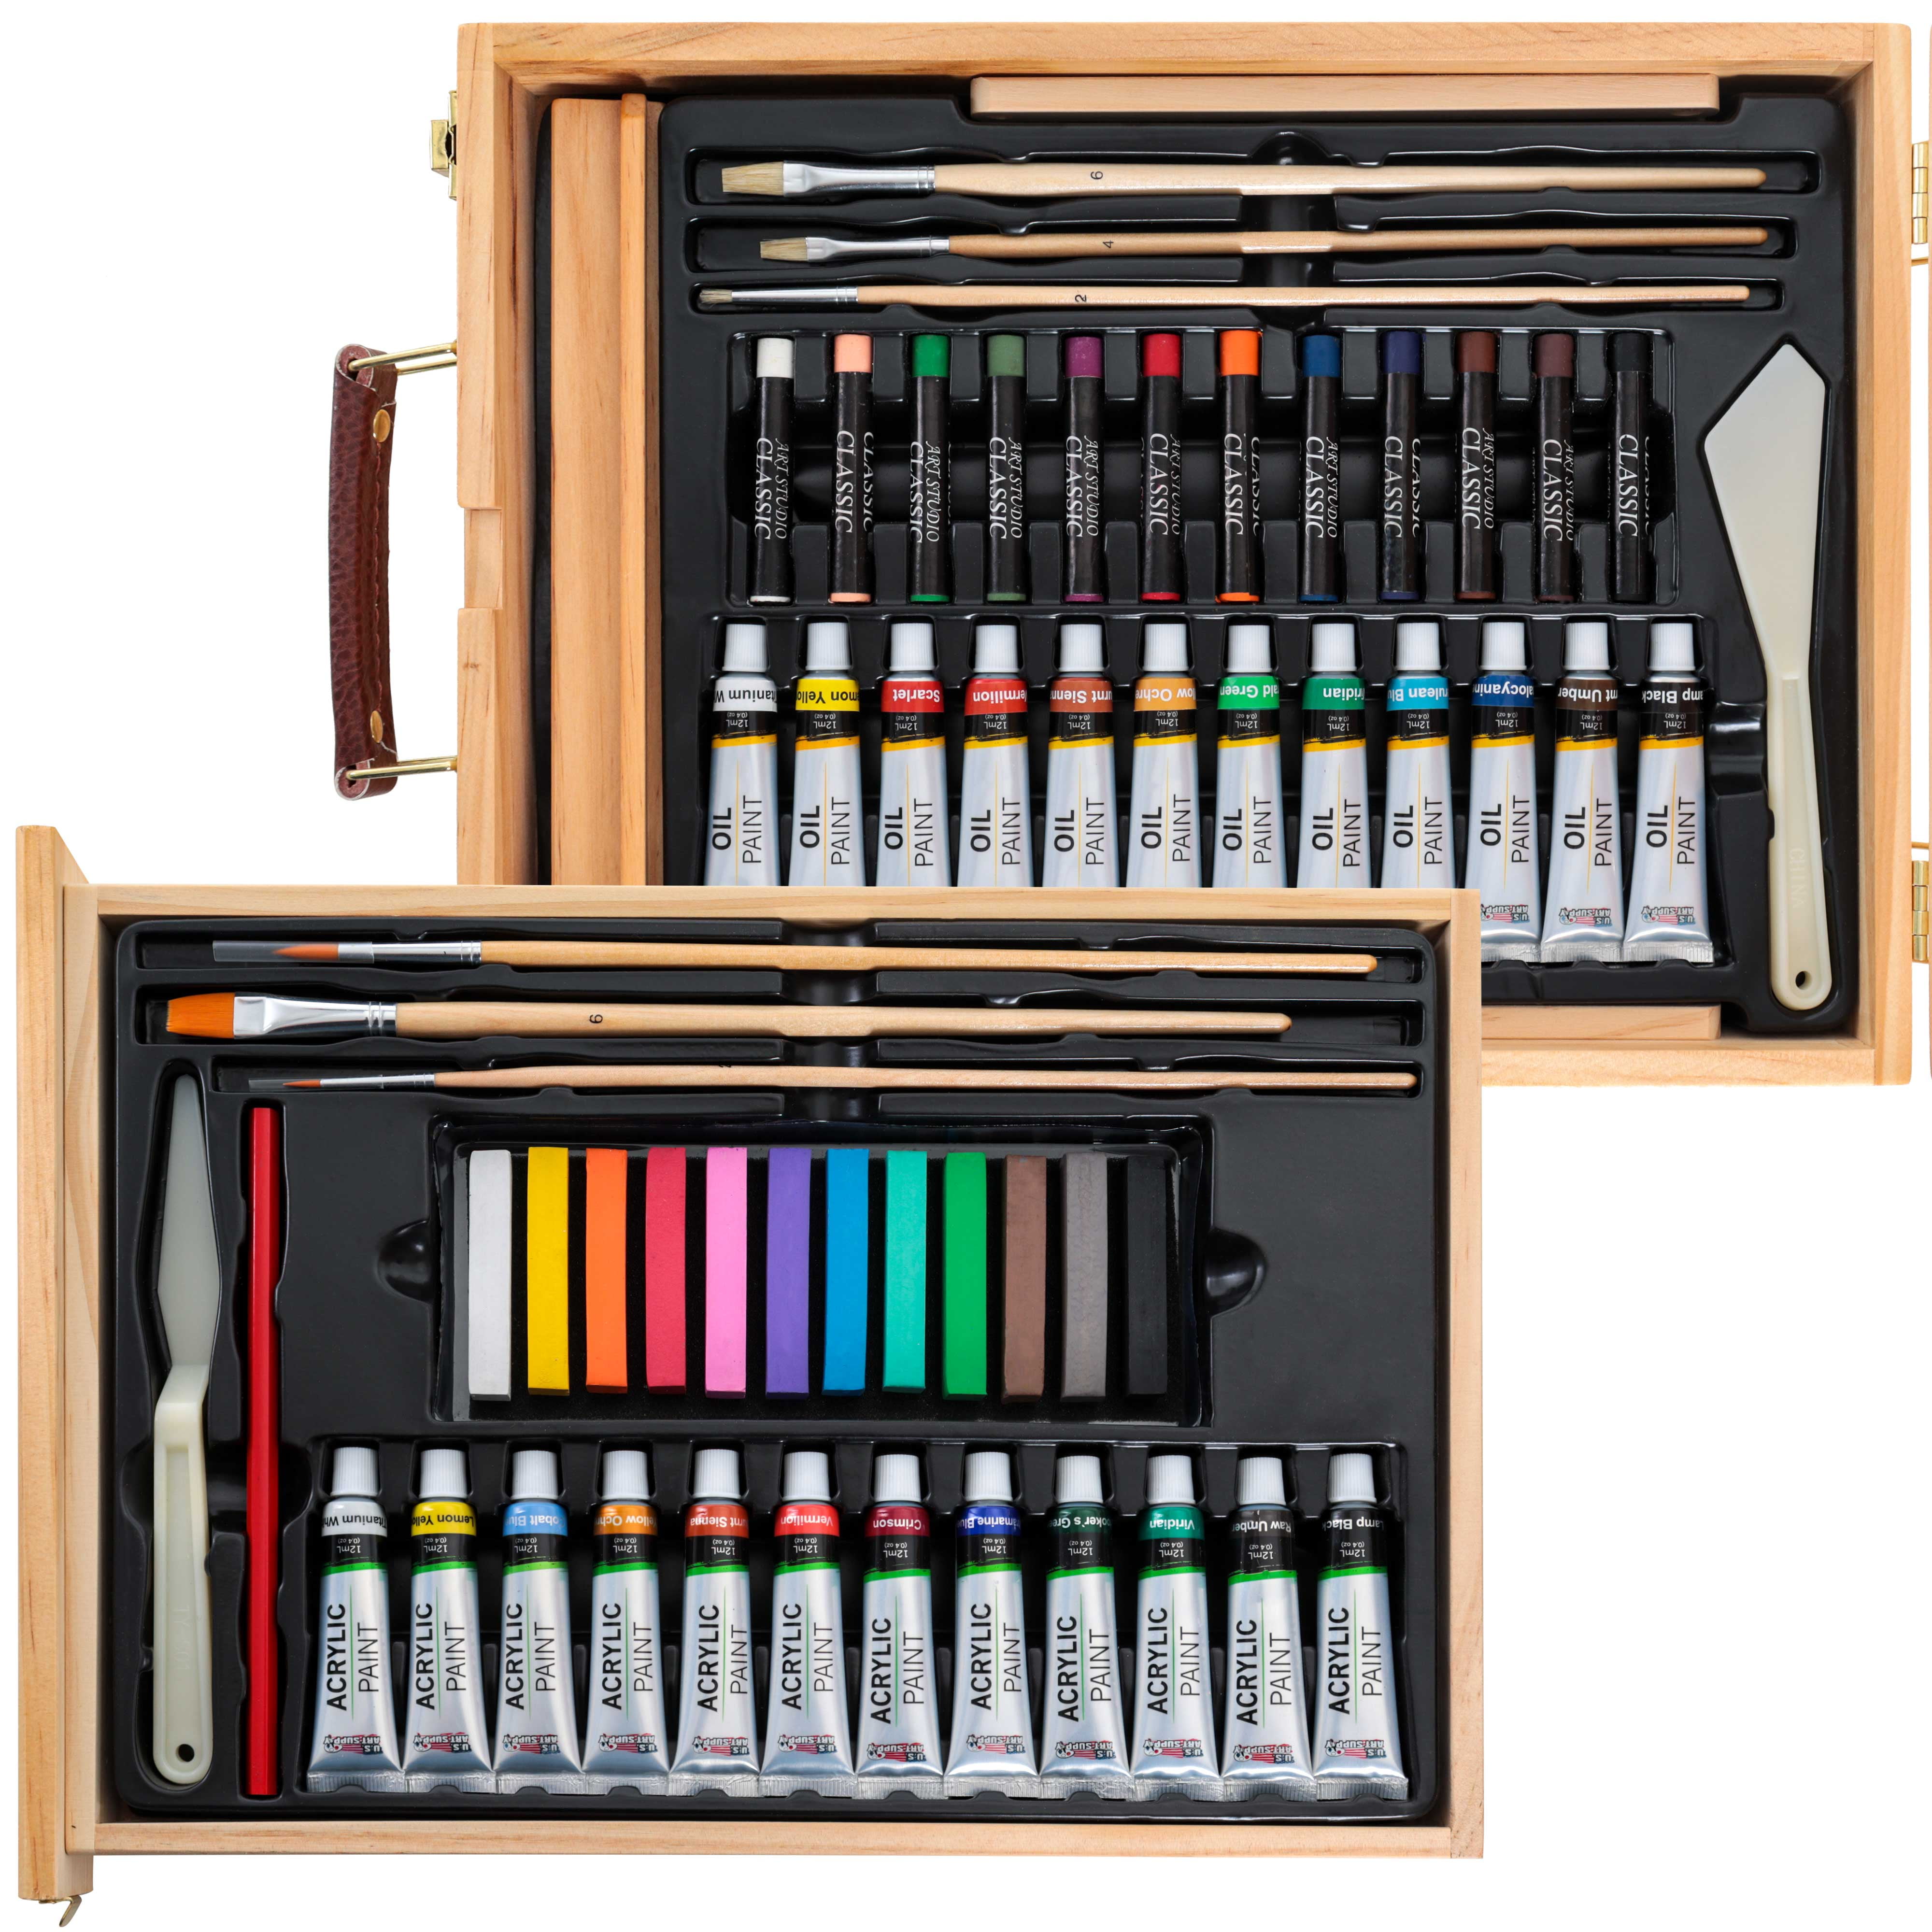 U.S. Art Supply 28-Piece Artist Oil Painting Set with 12 Vivid Oil Paint Colors, 12 Easel, 3 Canvas Panels, 10 Brushes, Painting Palette, Color